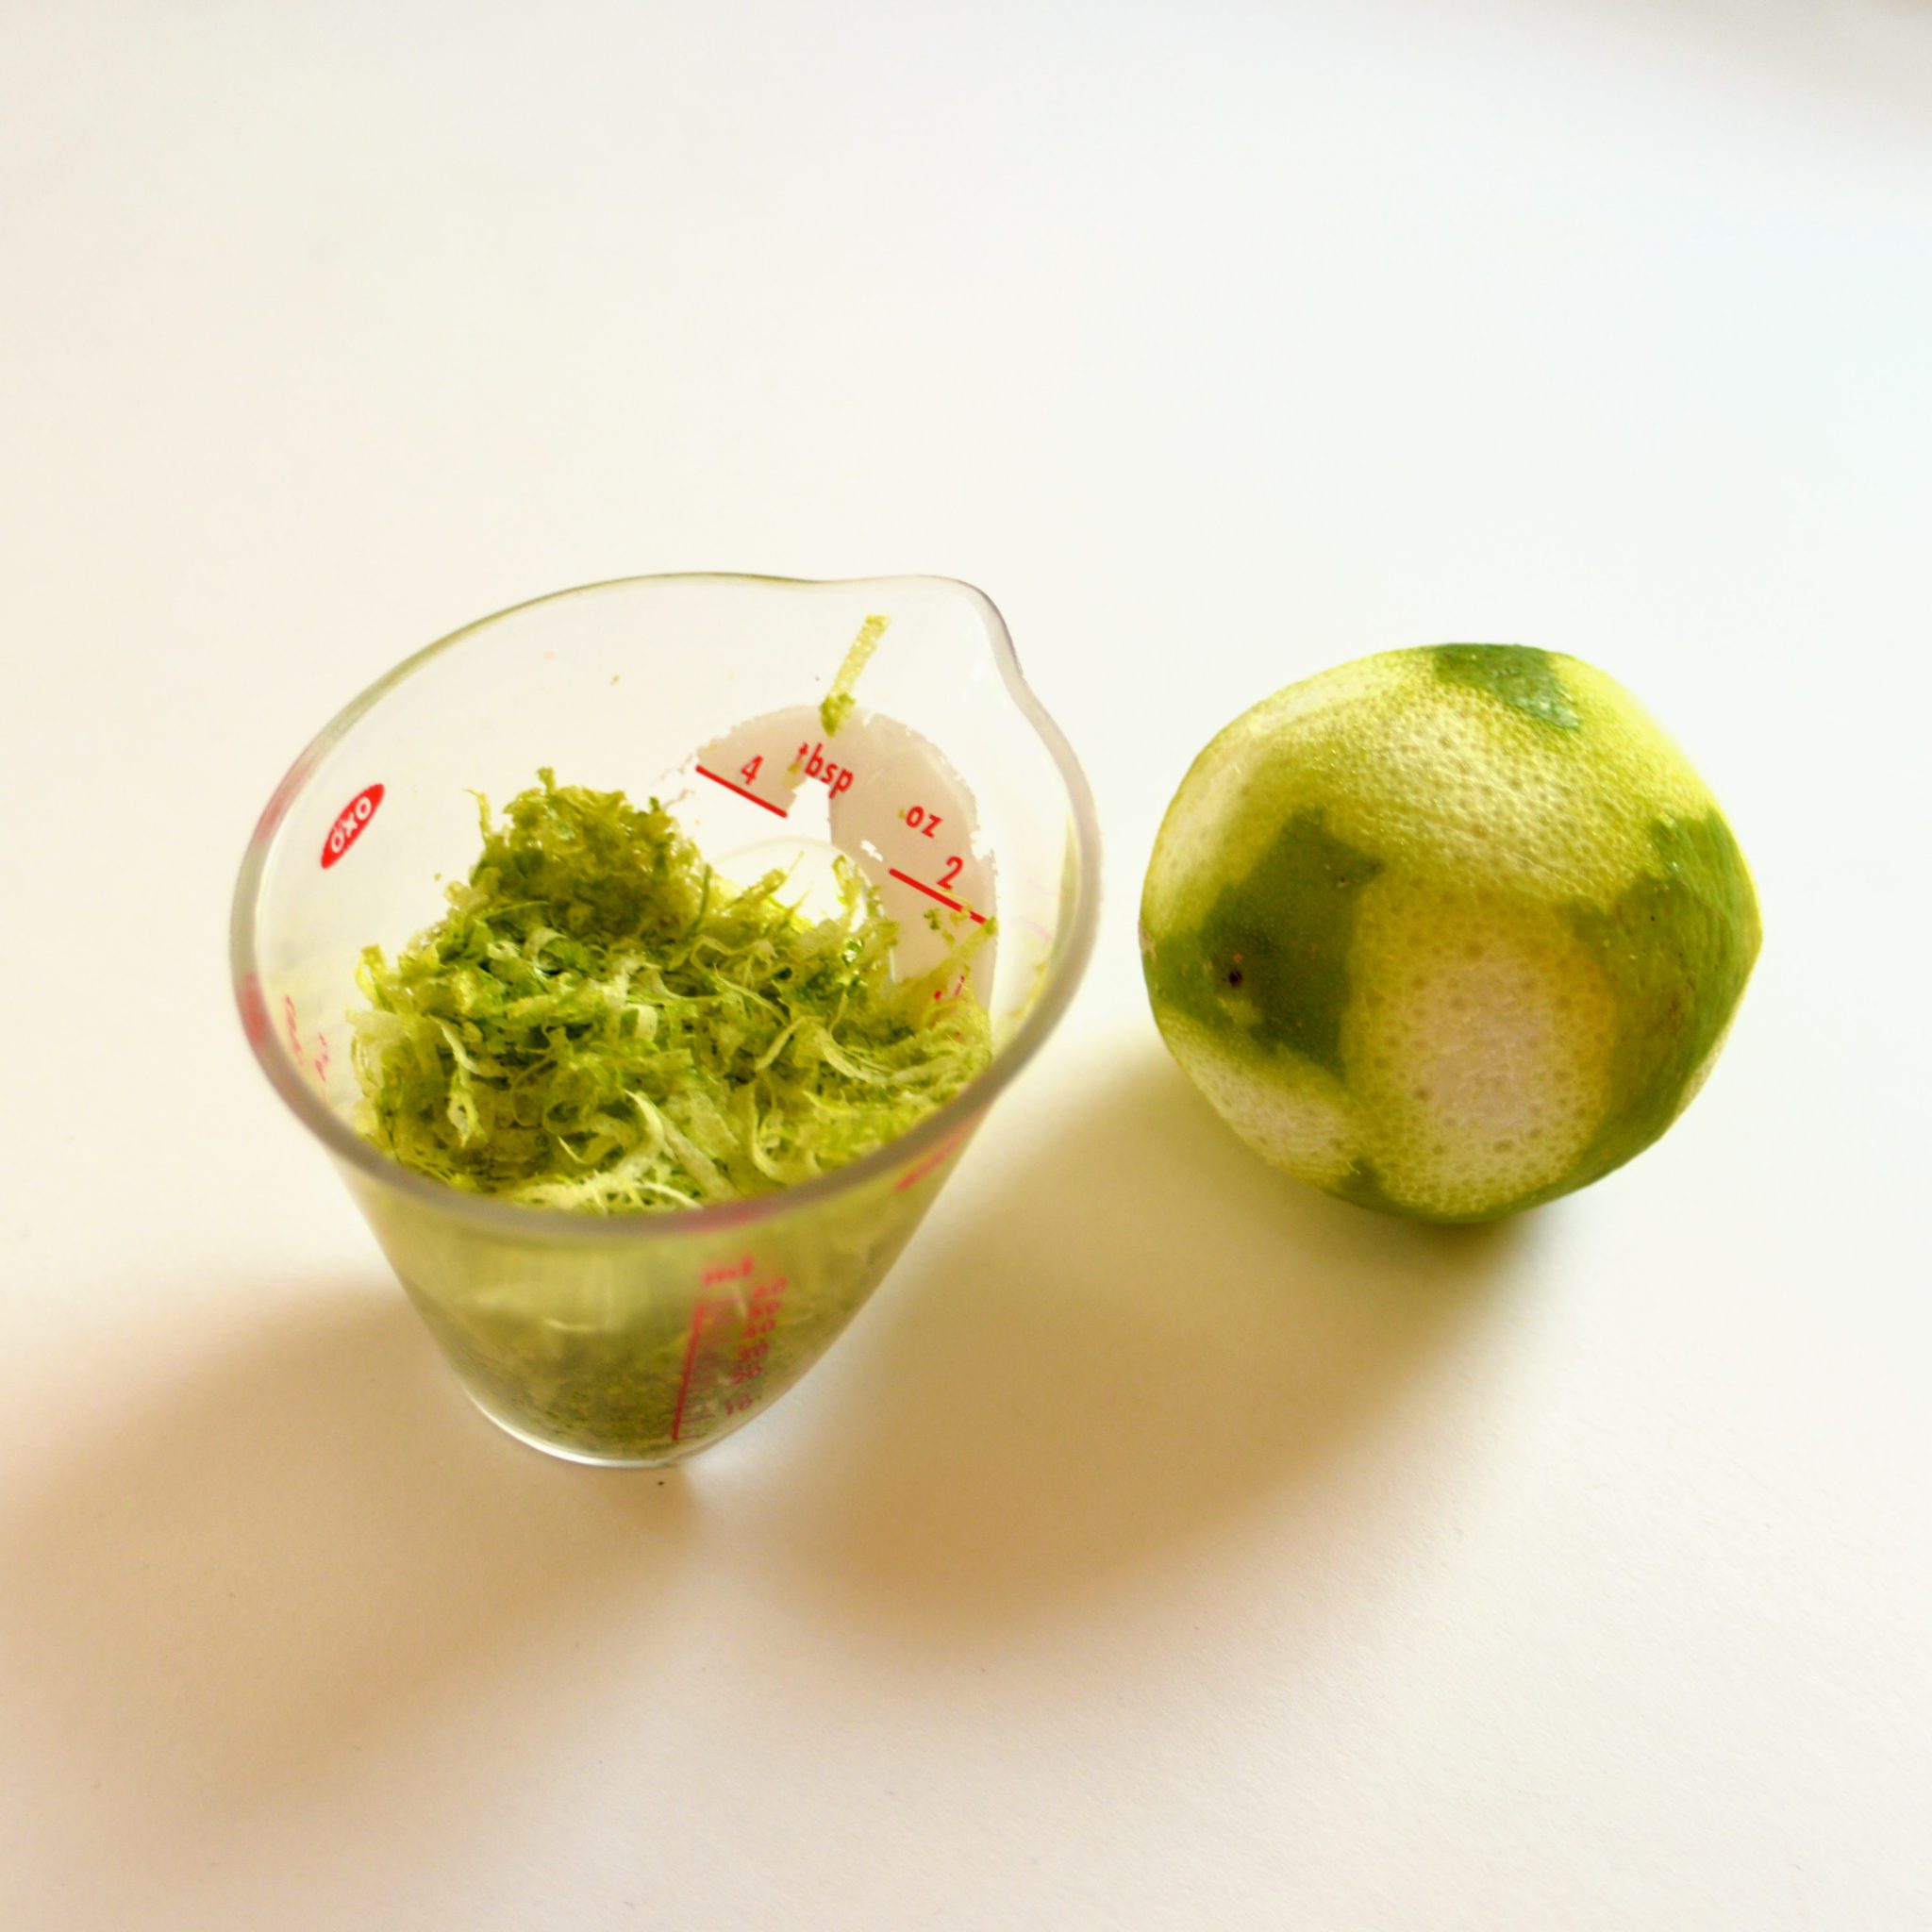 Lime Cordial Recipe - The Drunkard's Almanac